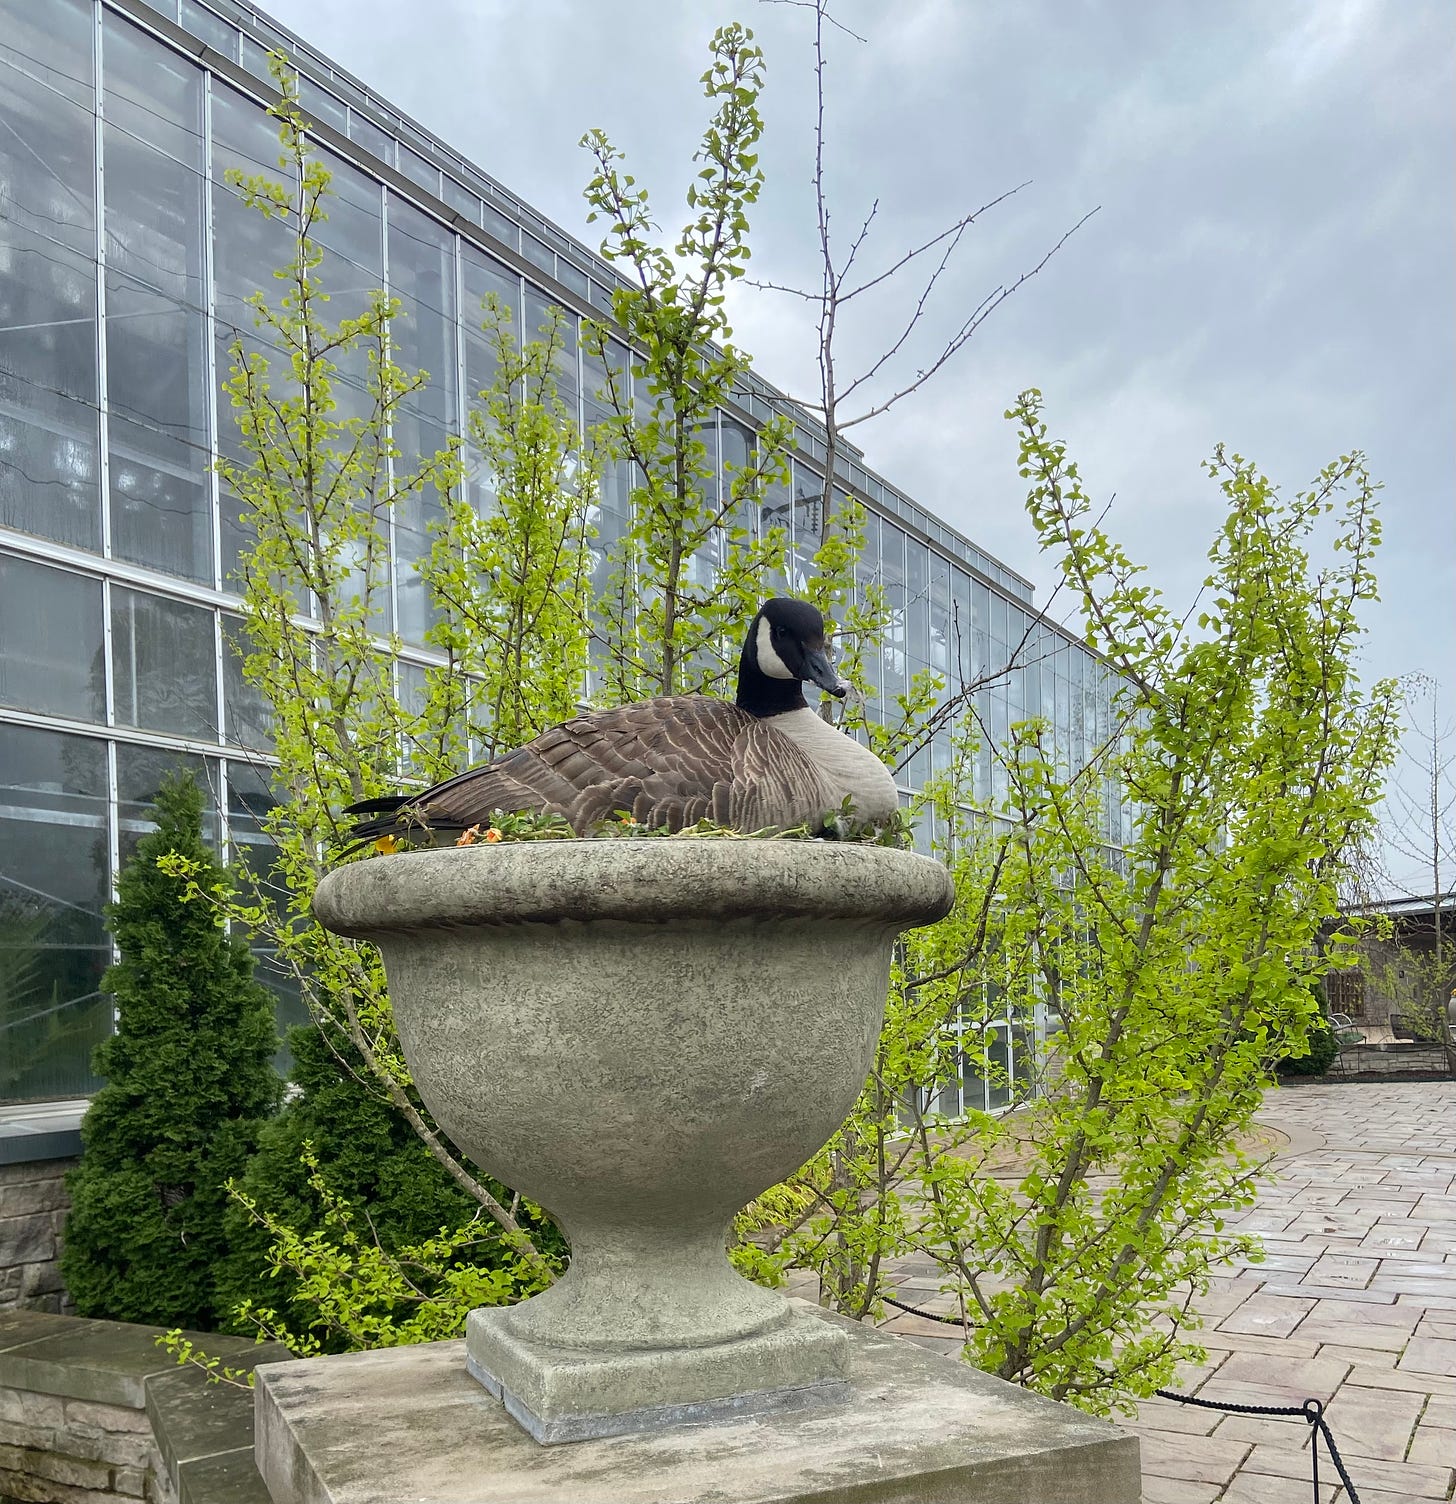 a goose sitting inside a concrete planter